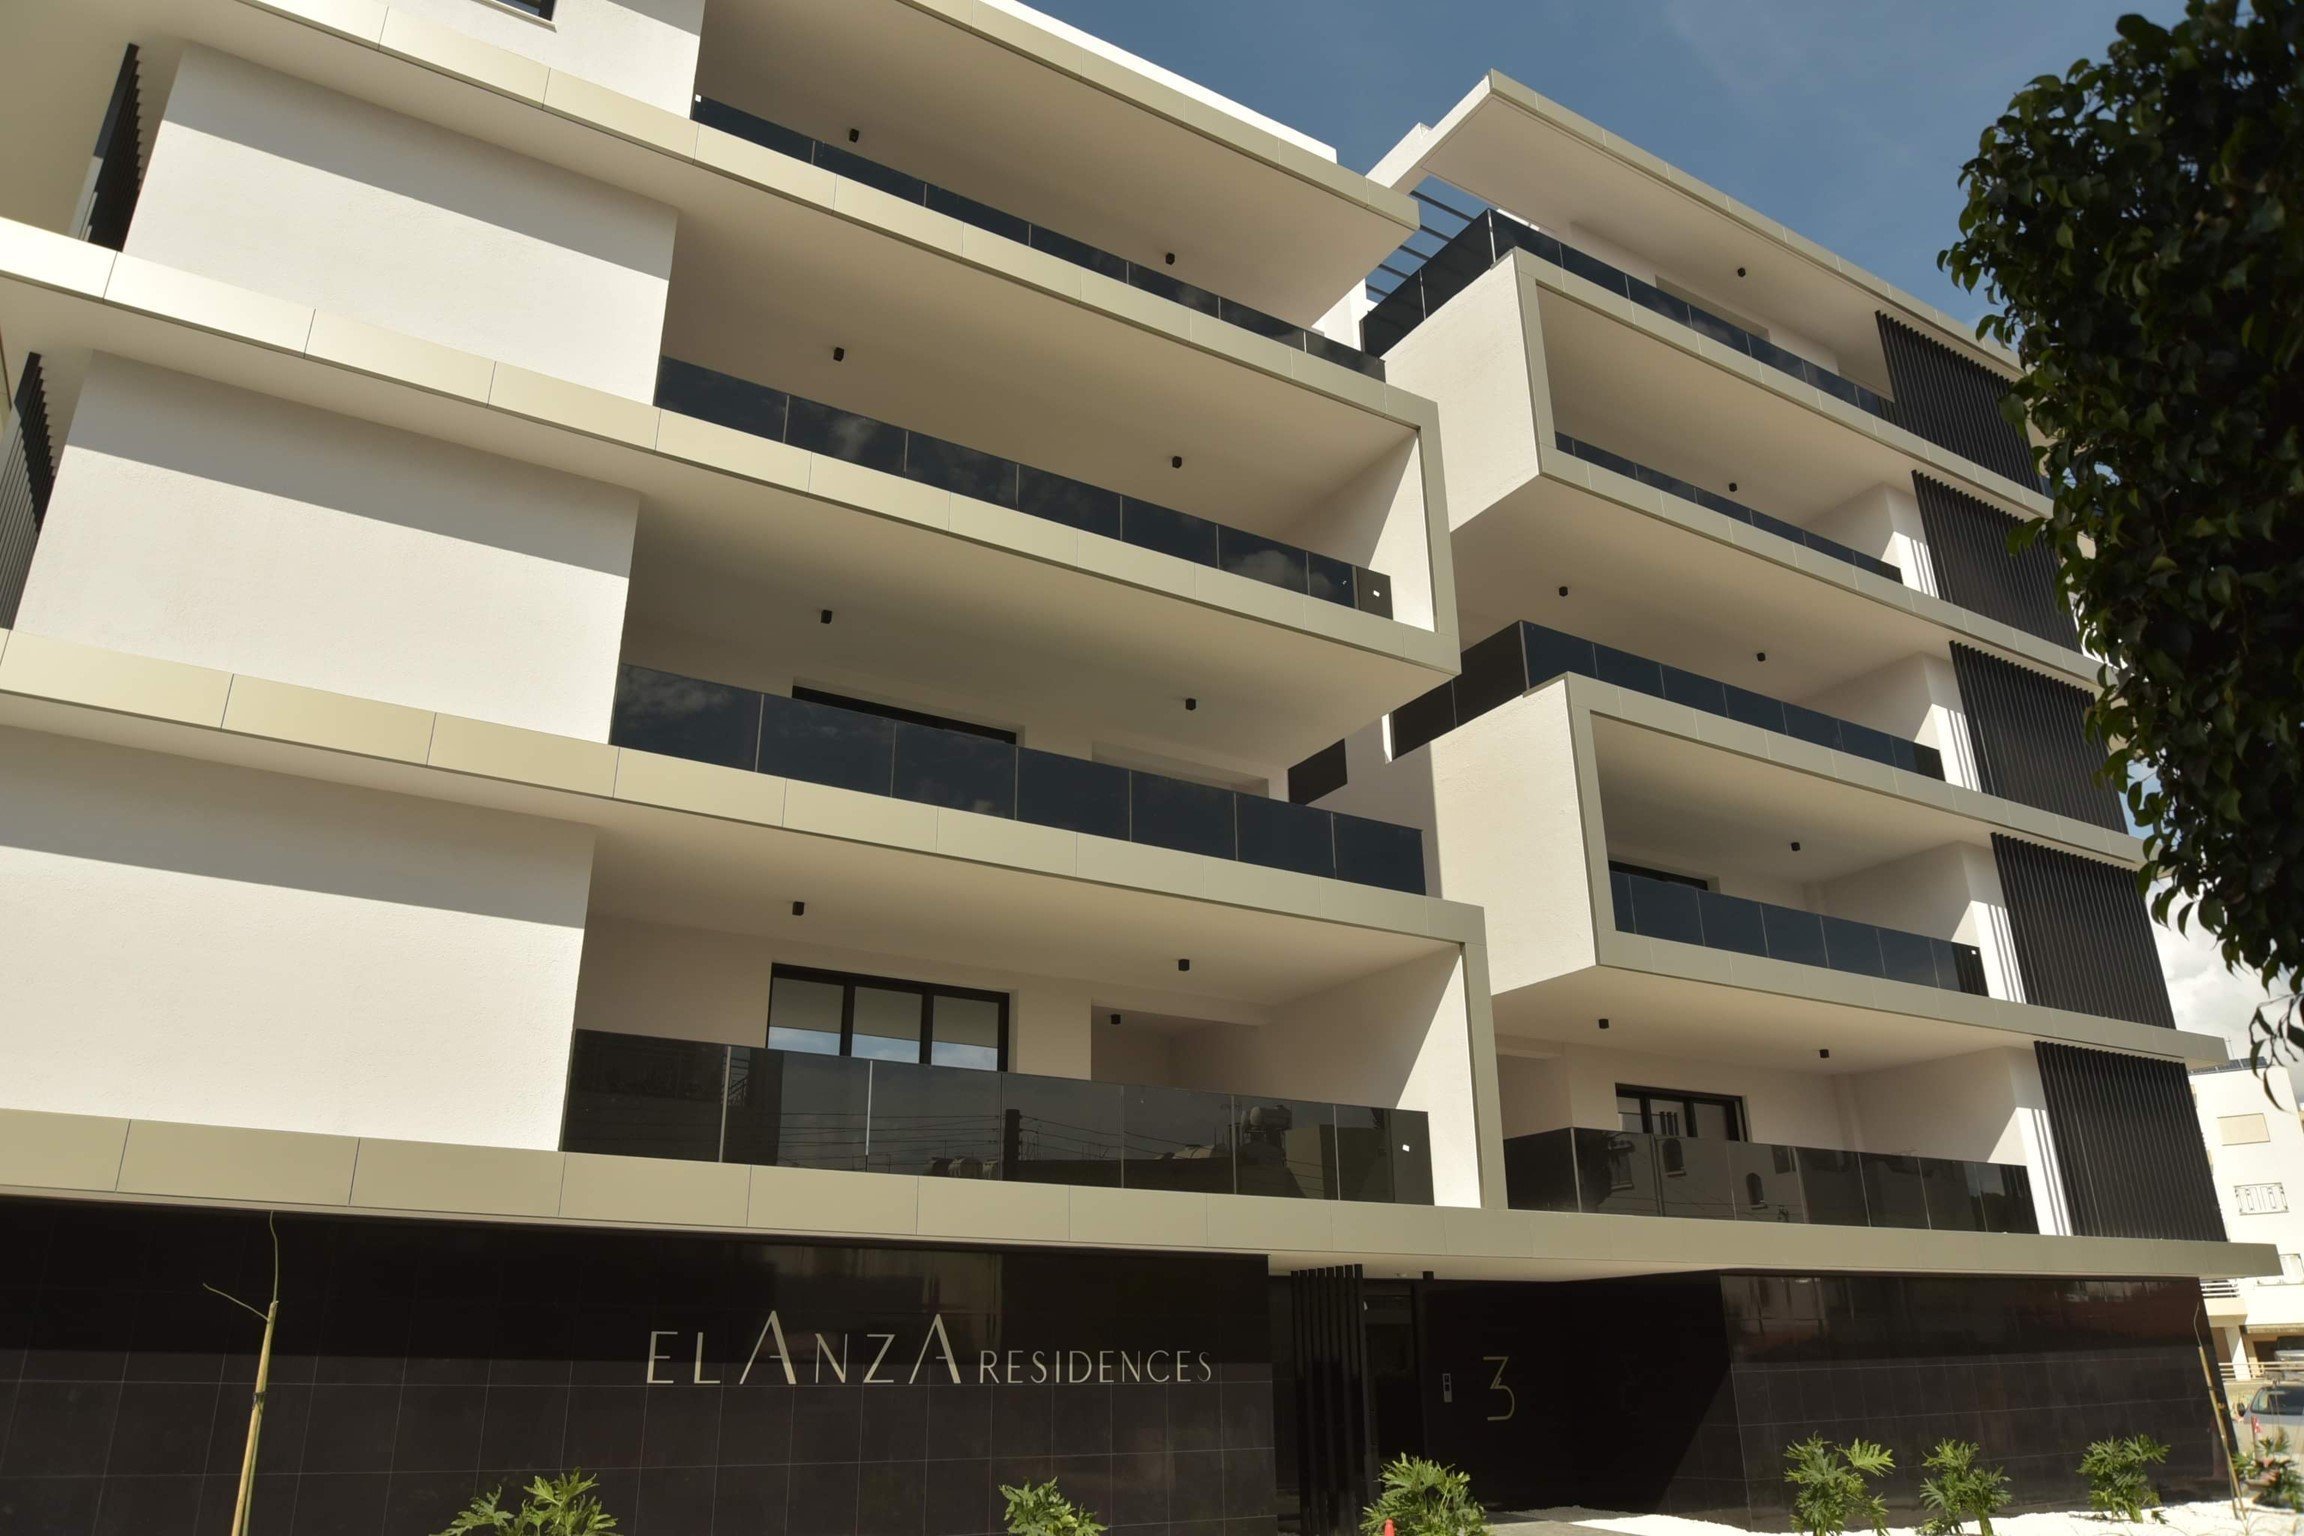 Elanza Residences - Το νέο οικιστικό έργο της Rotosgroup